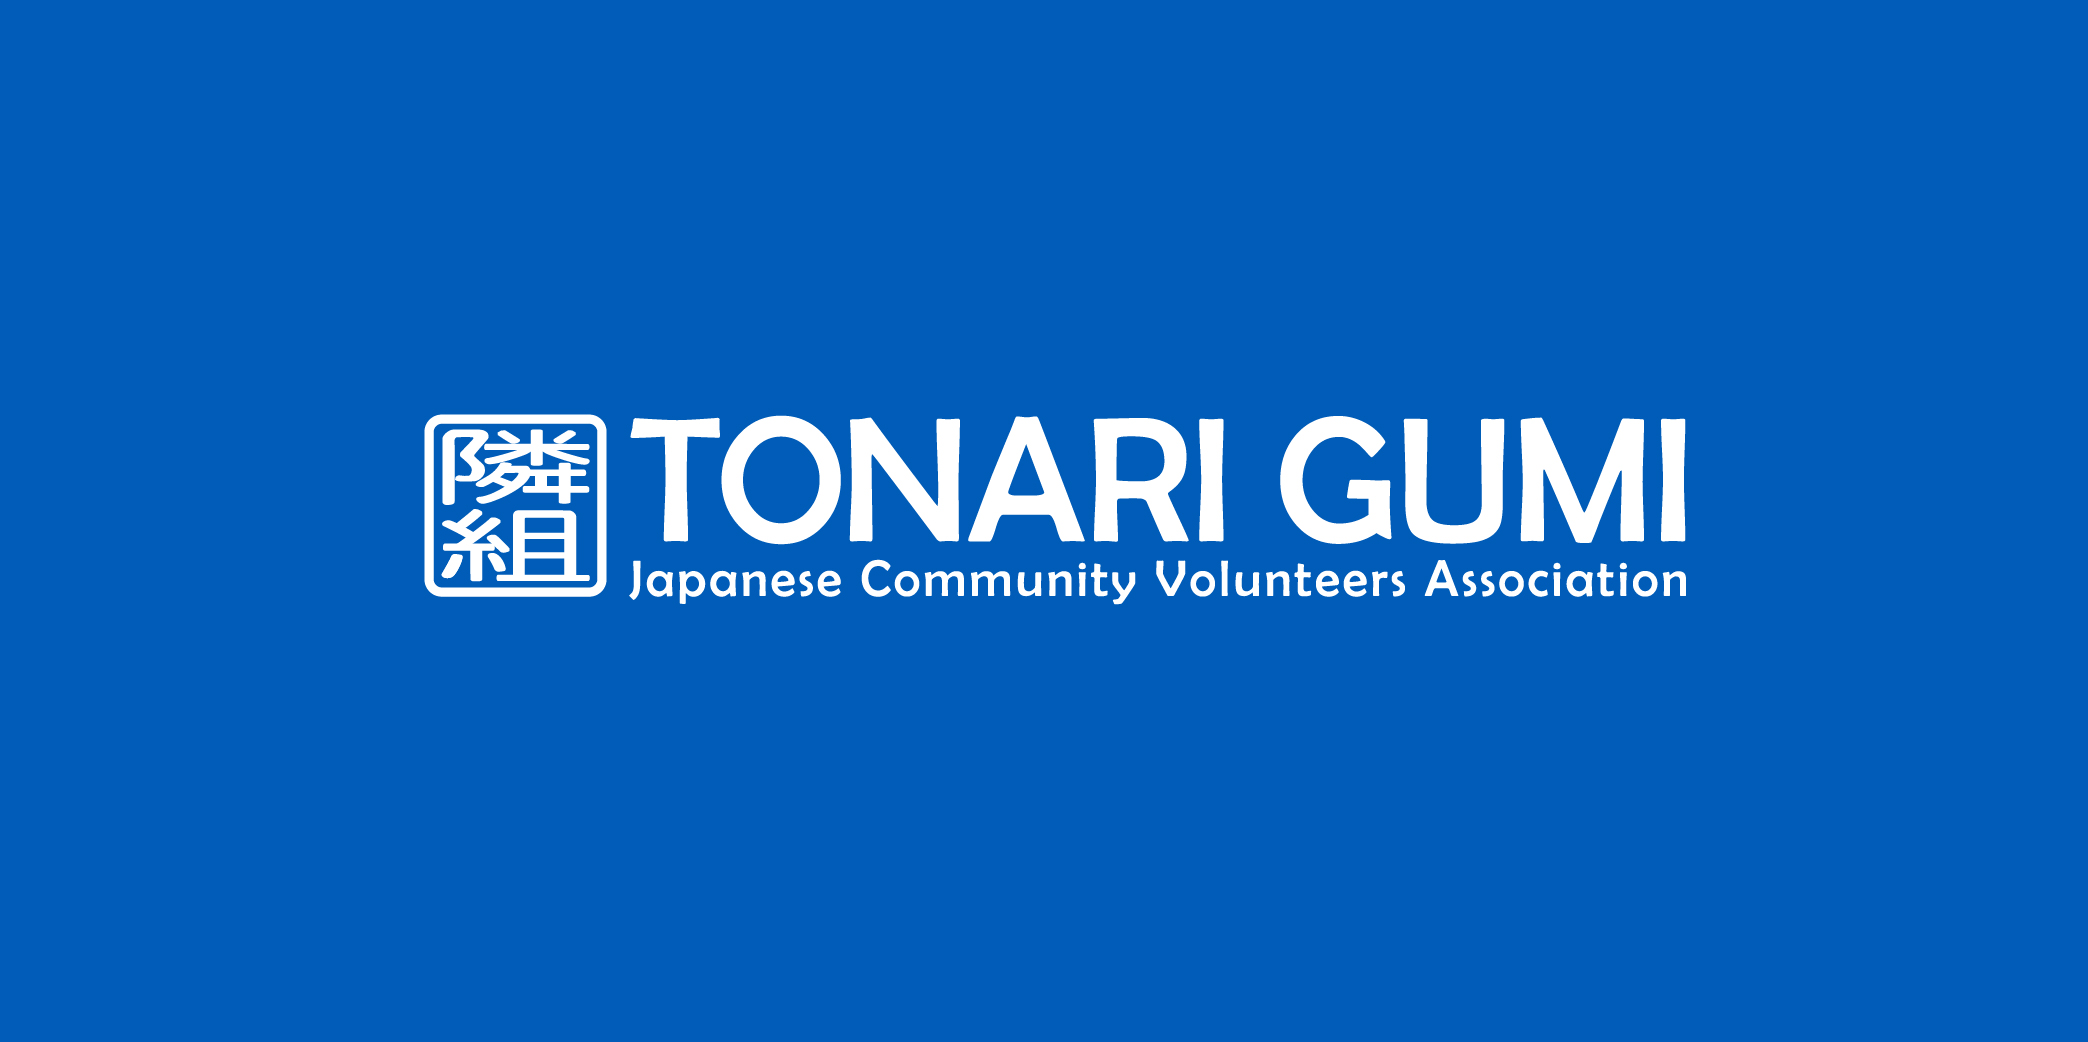 A thumbnail image for Tonari Gumi.